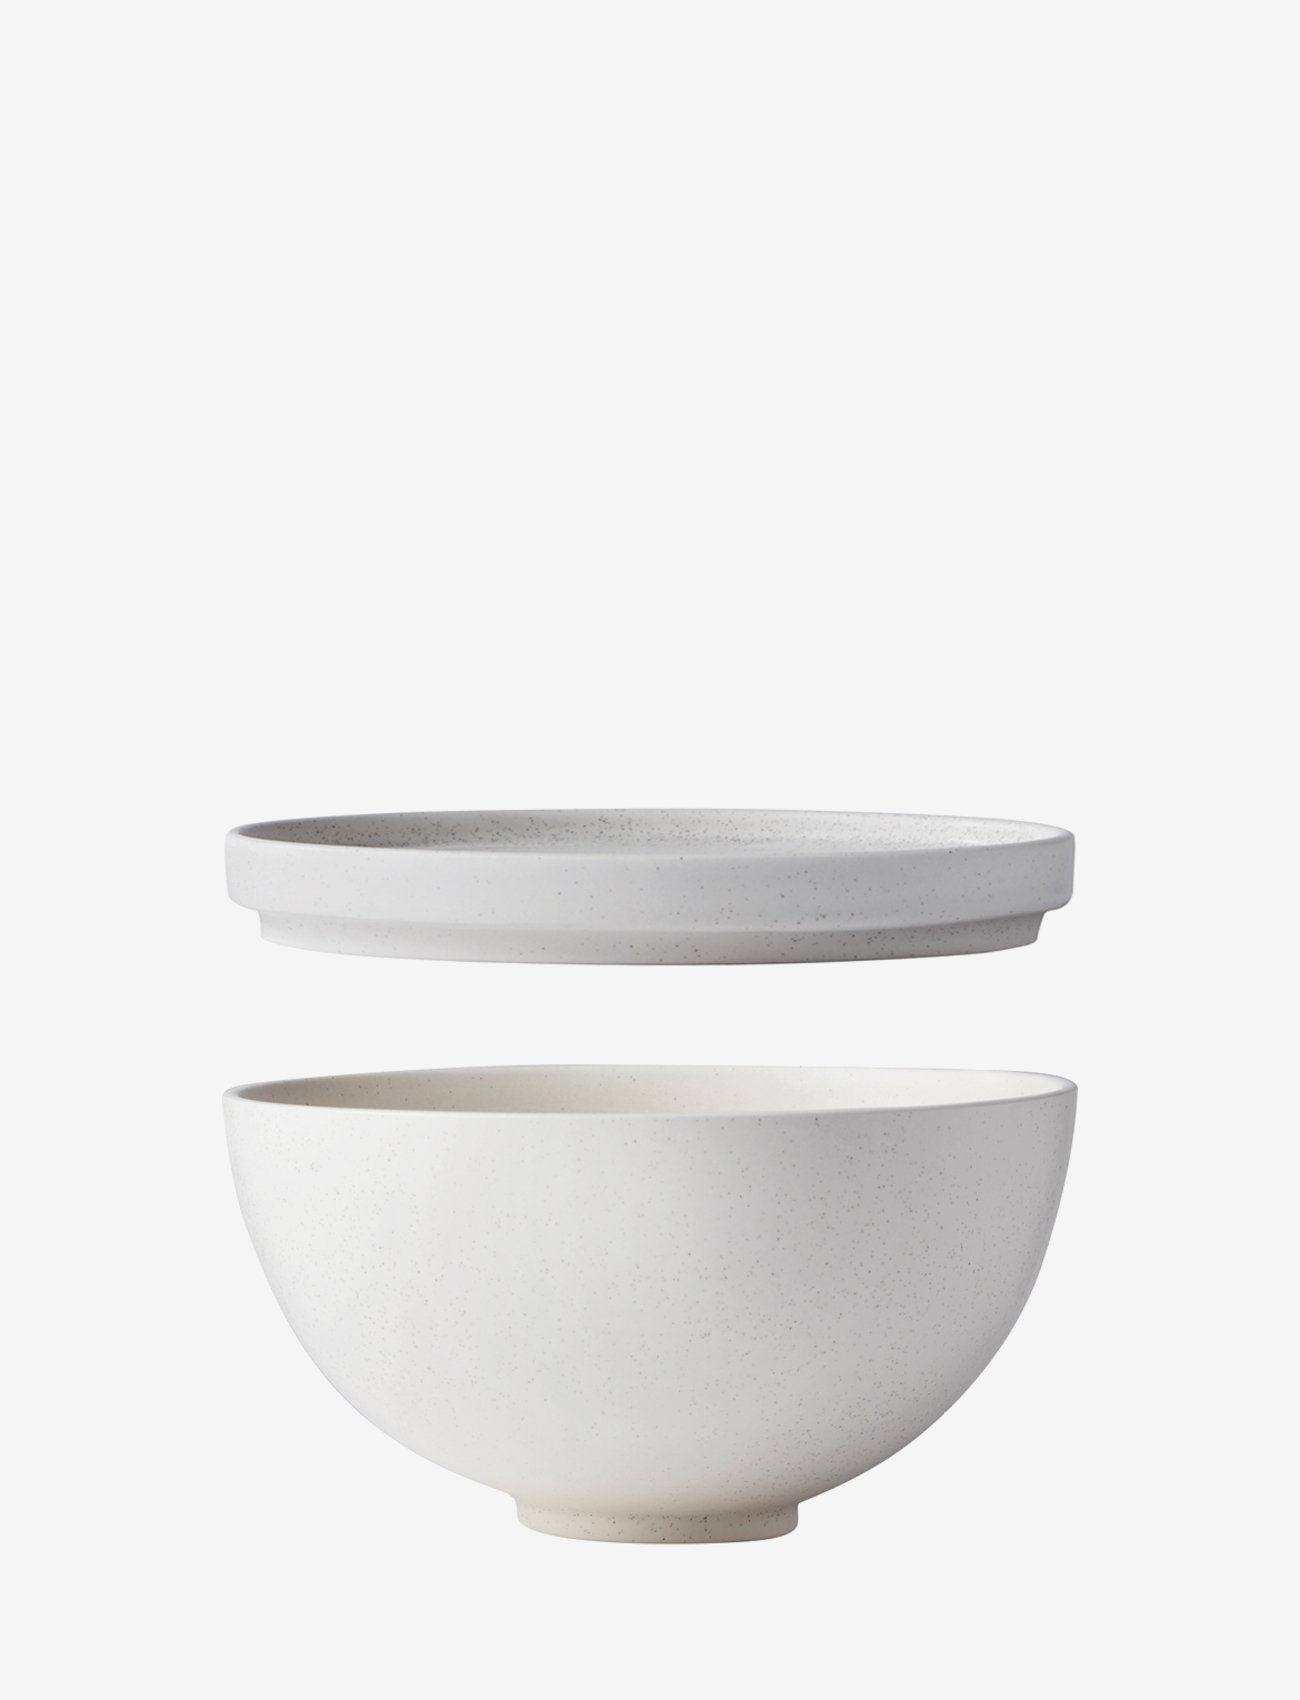 Kristina Dam Studio - Setomono Bowl Set - Large - Off-white - müslischalen - ceramics - 0